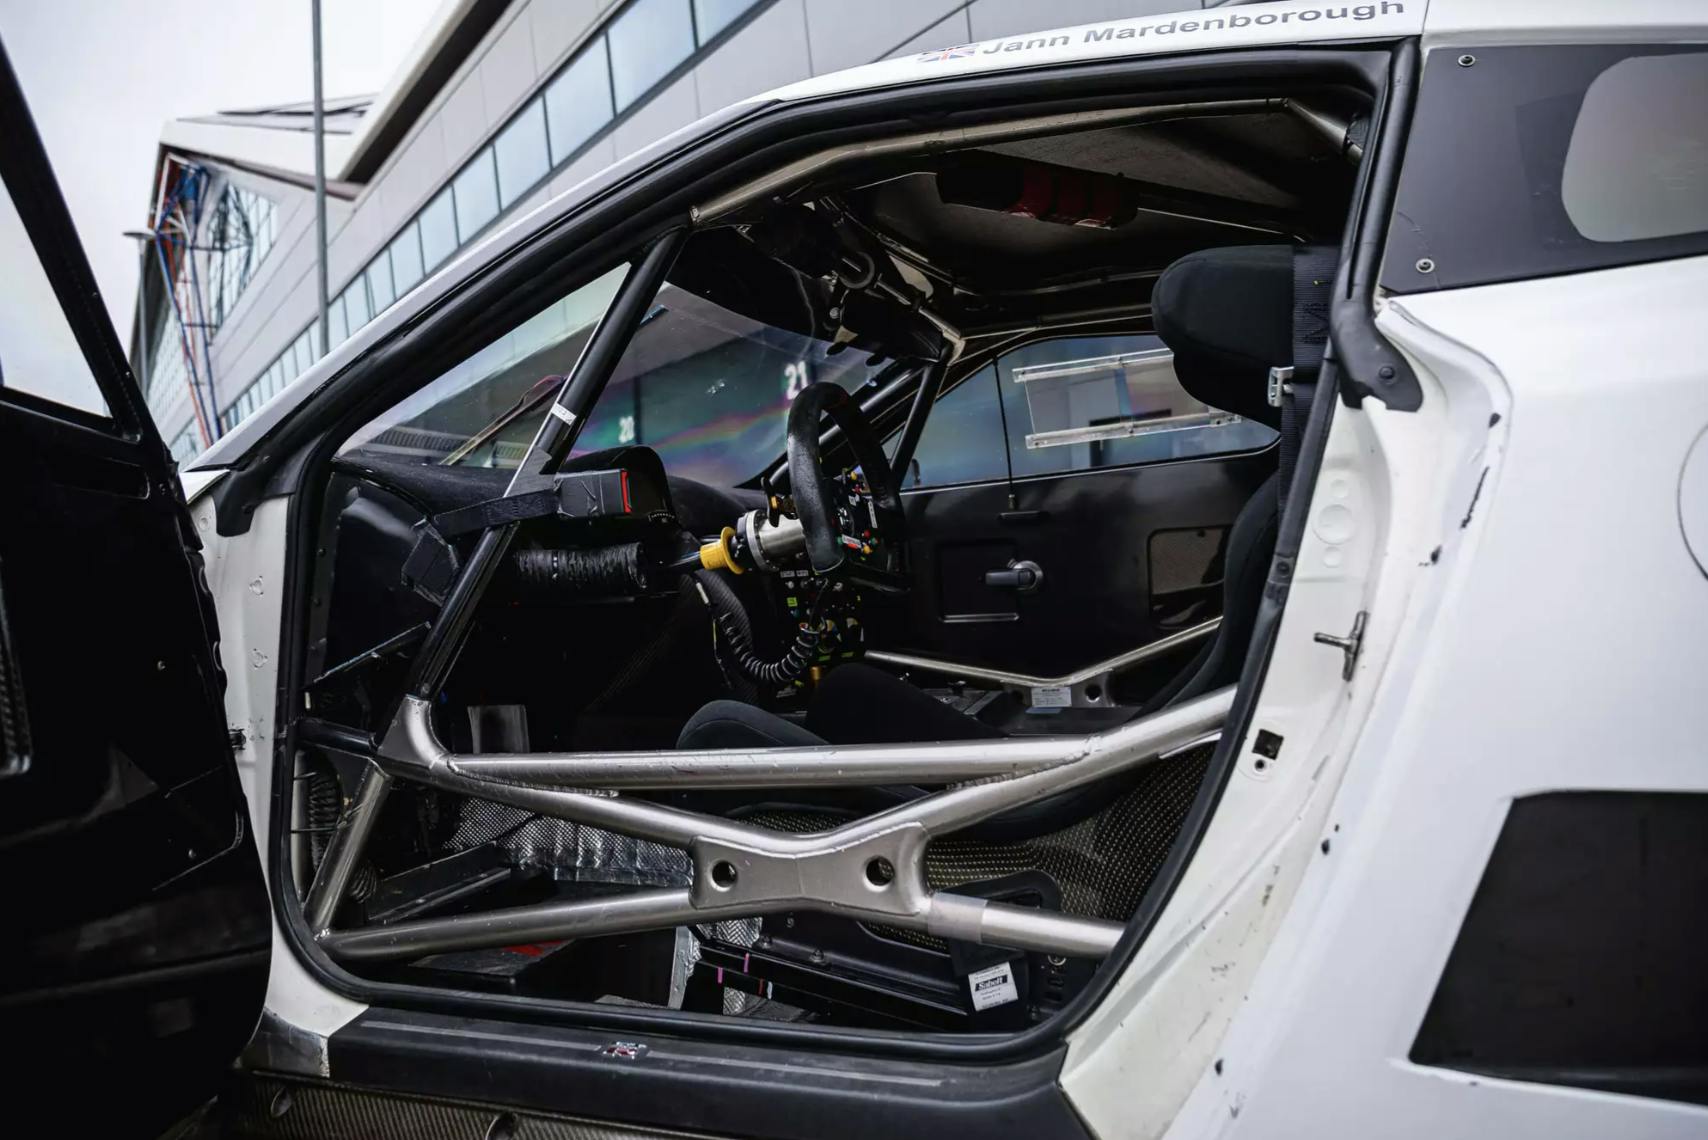 2014 Nissan R35 GT-R cockpit